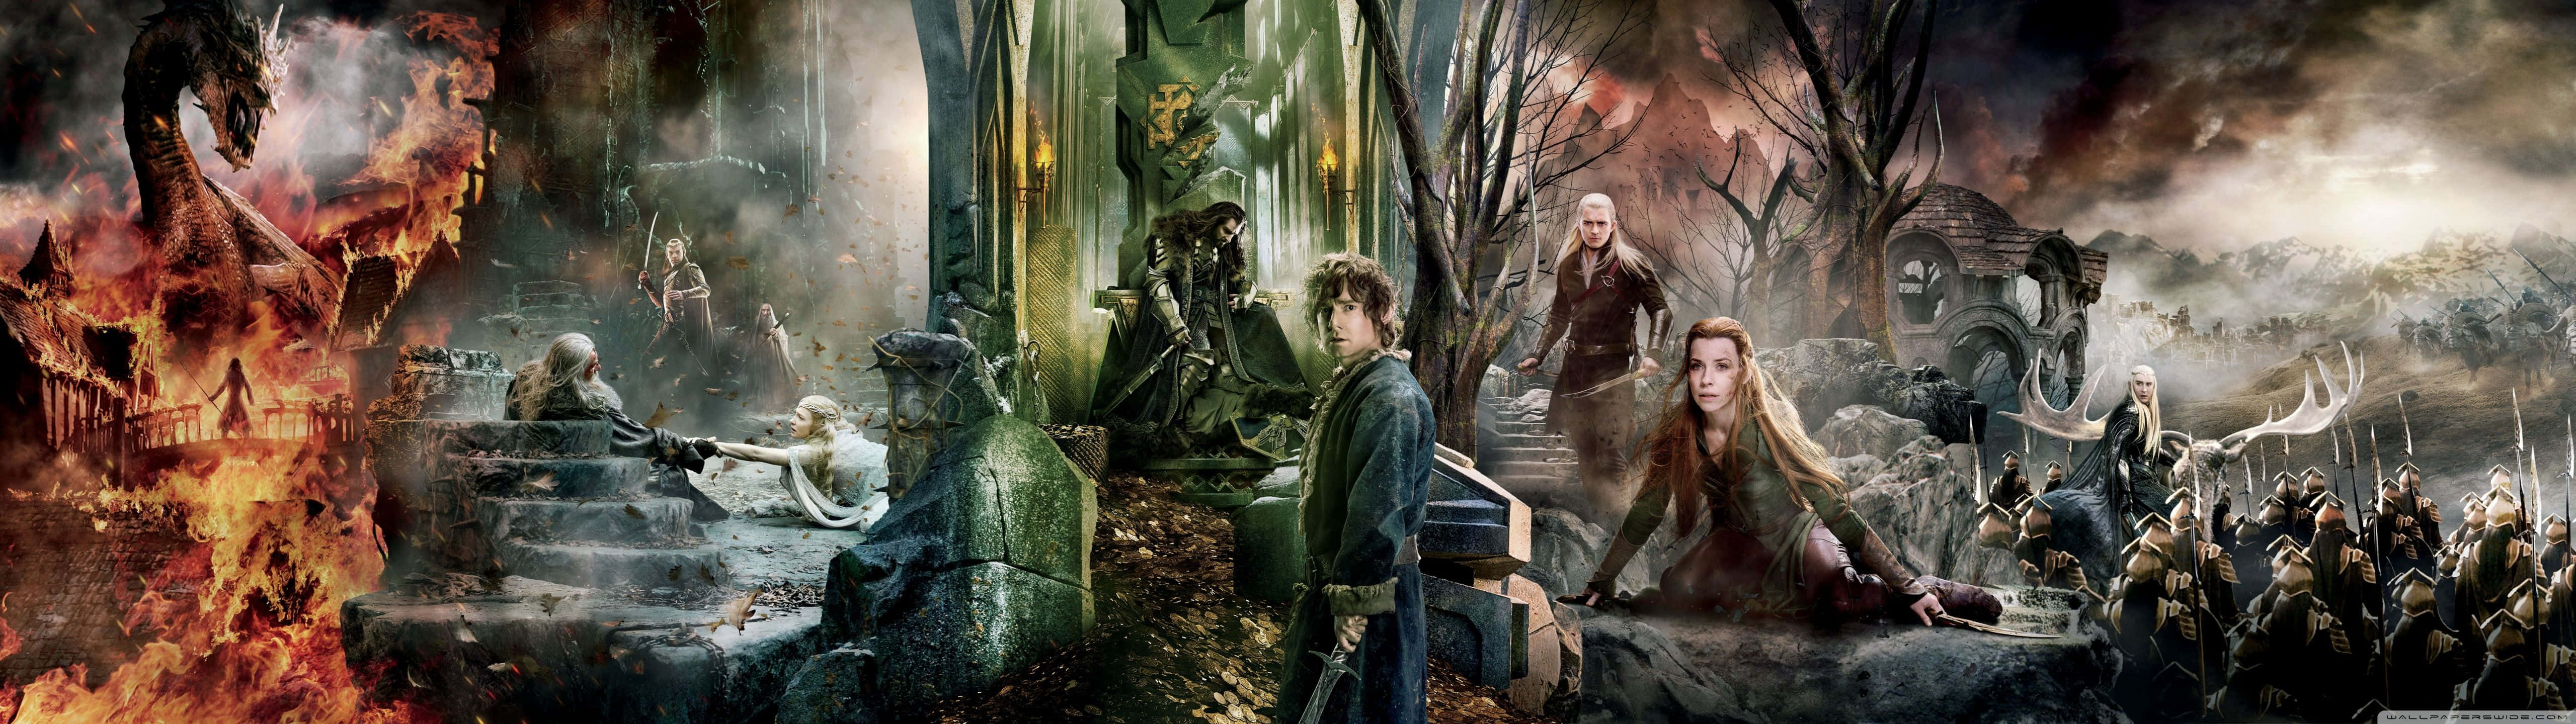 The hobbit movie poster - 5120x1440